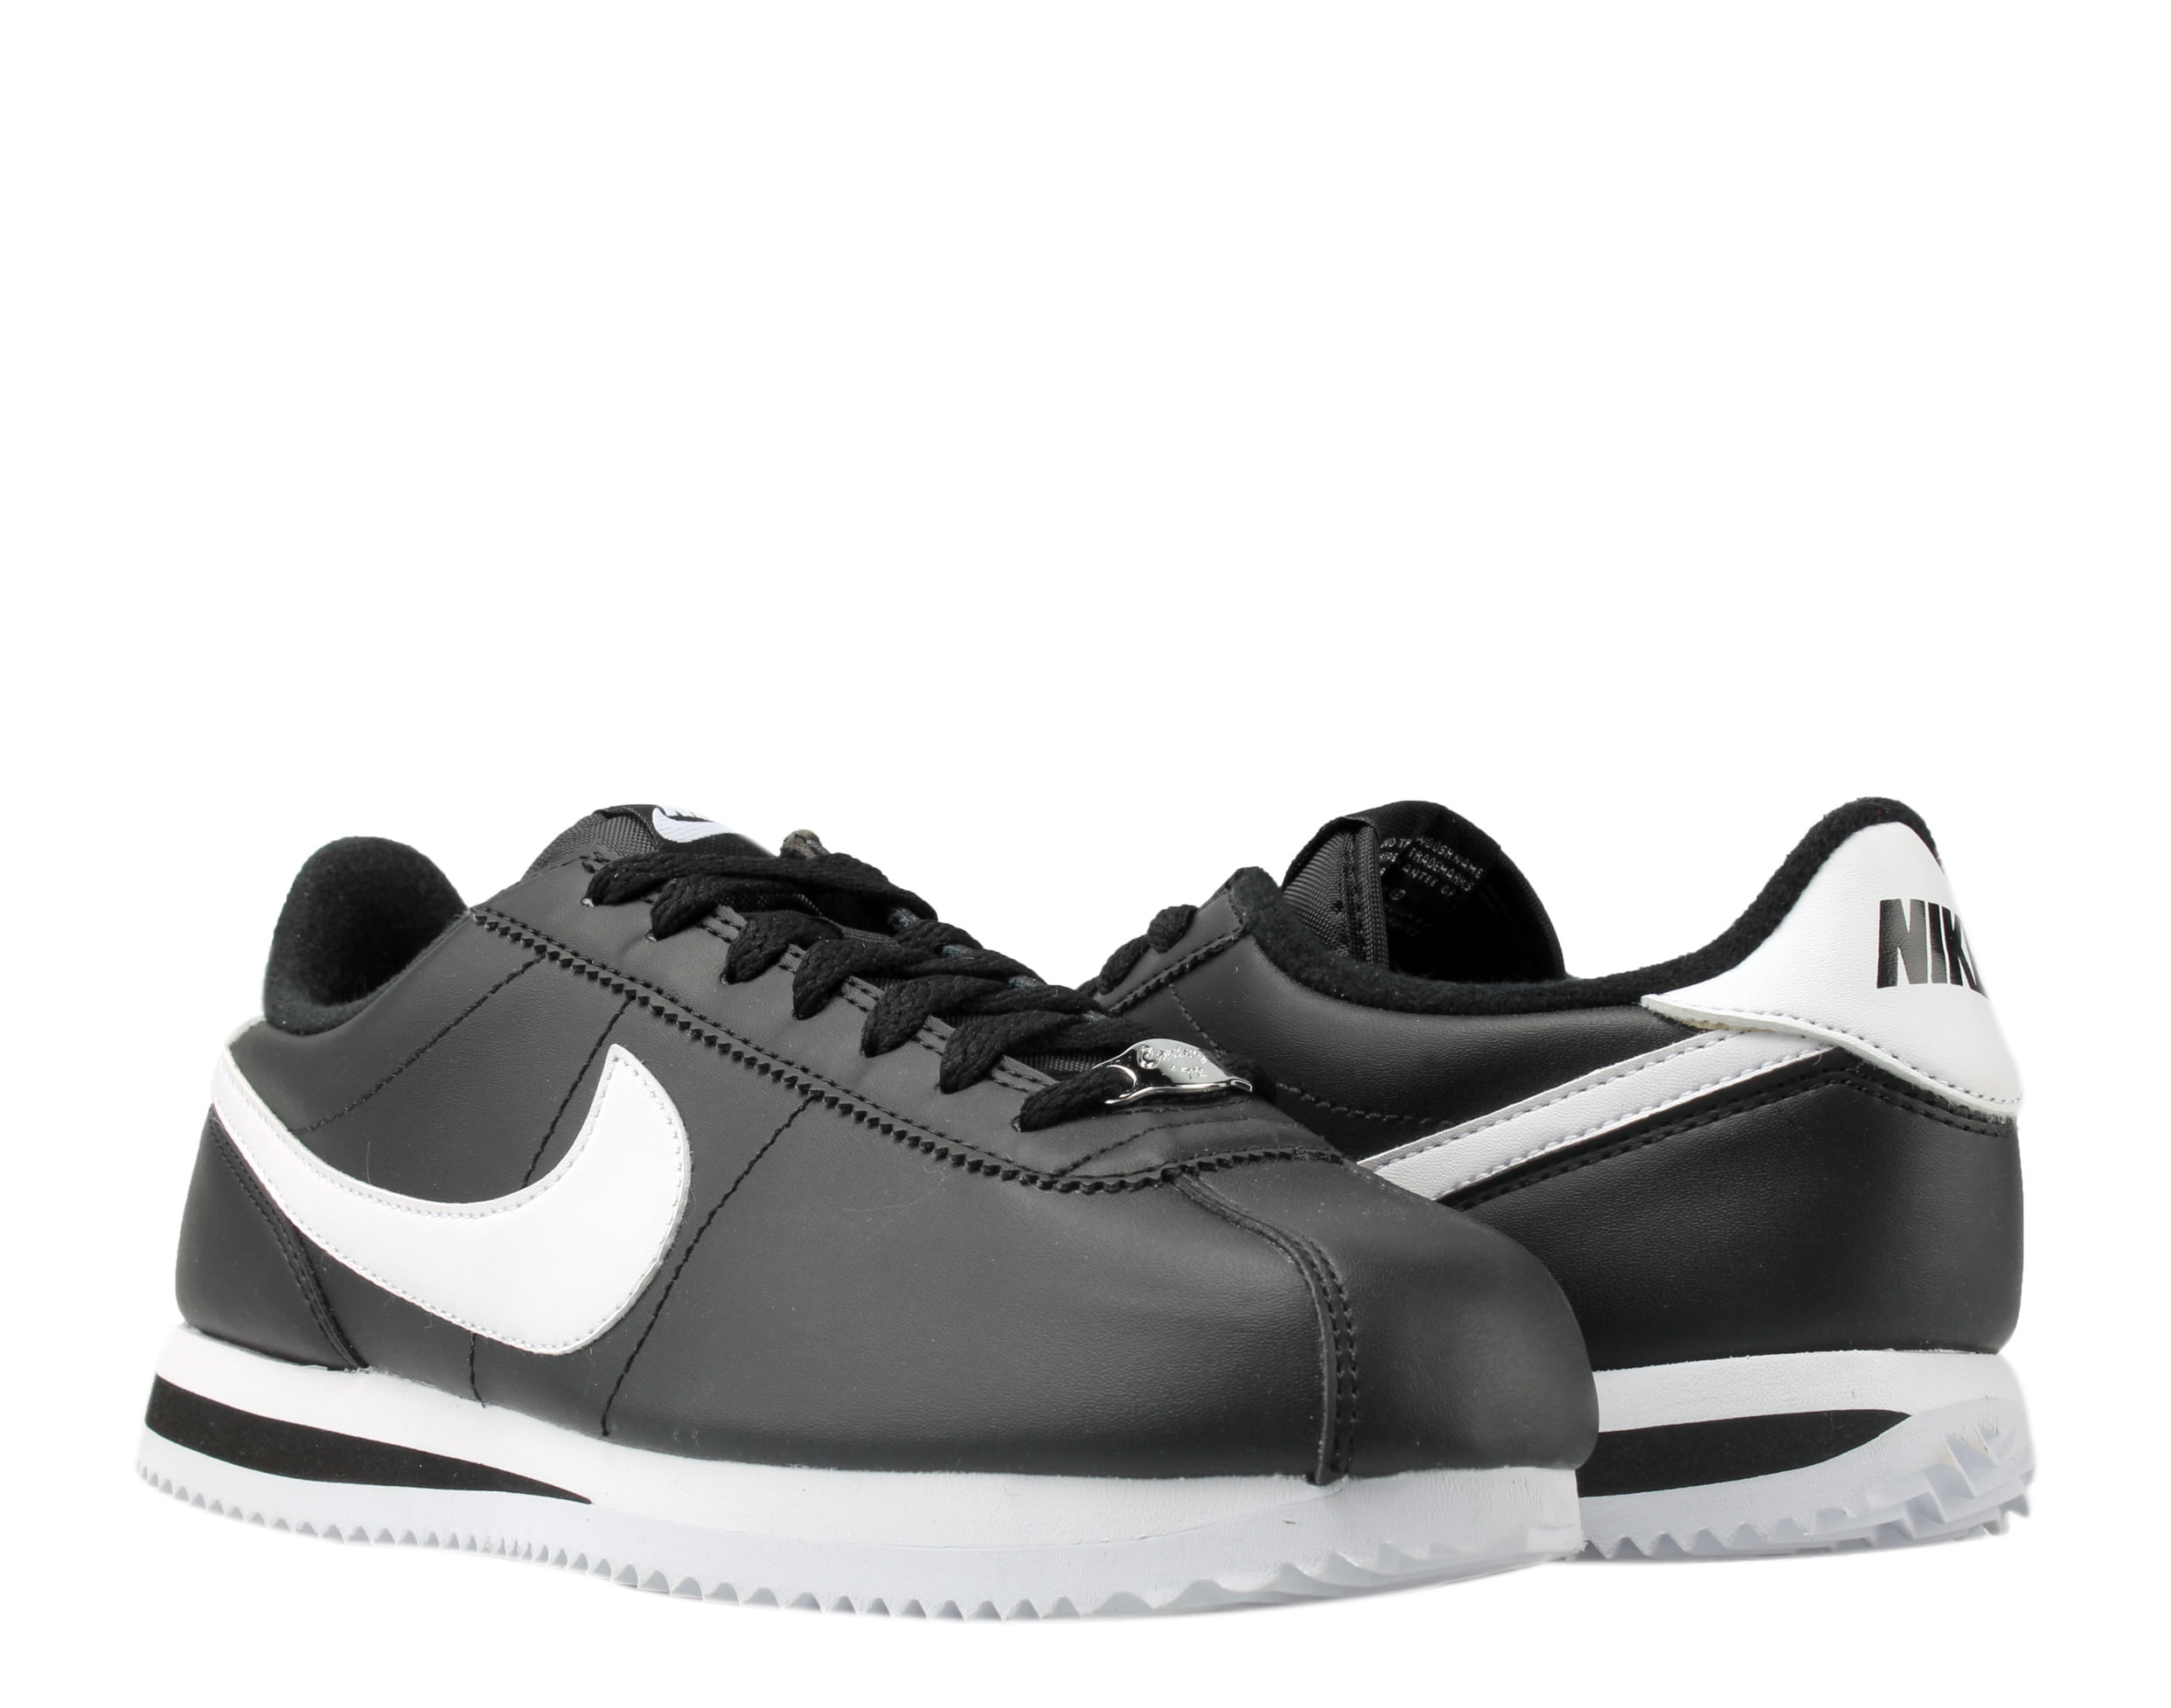 Nike Cortez Leather Black/White/Metallic Silver Fashion Shoe (8) - Walmart.com